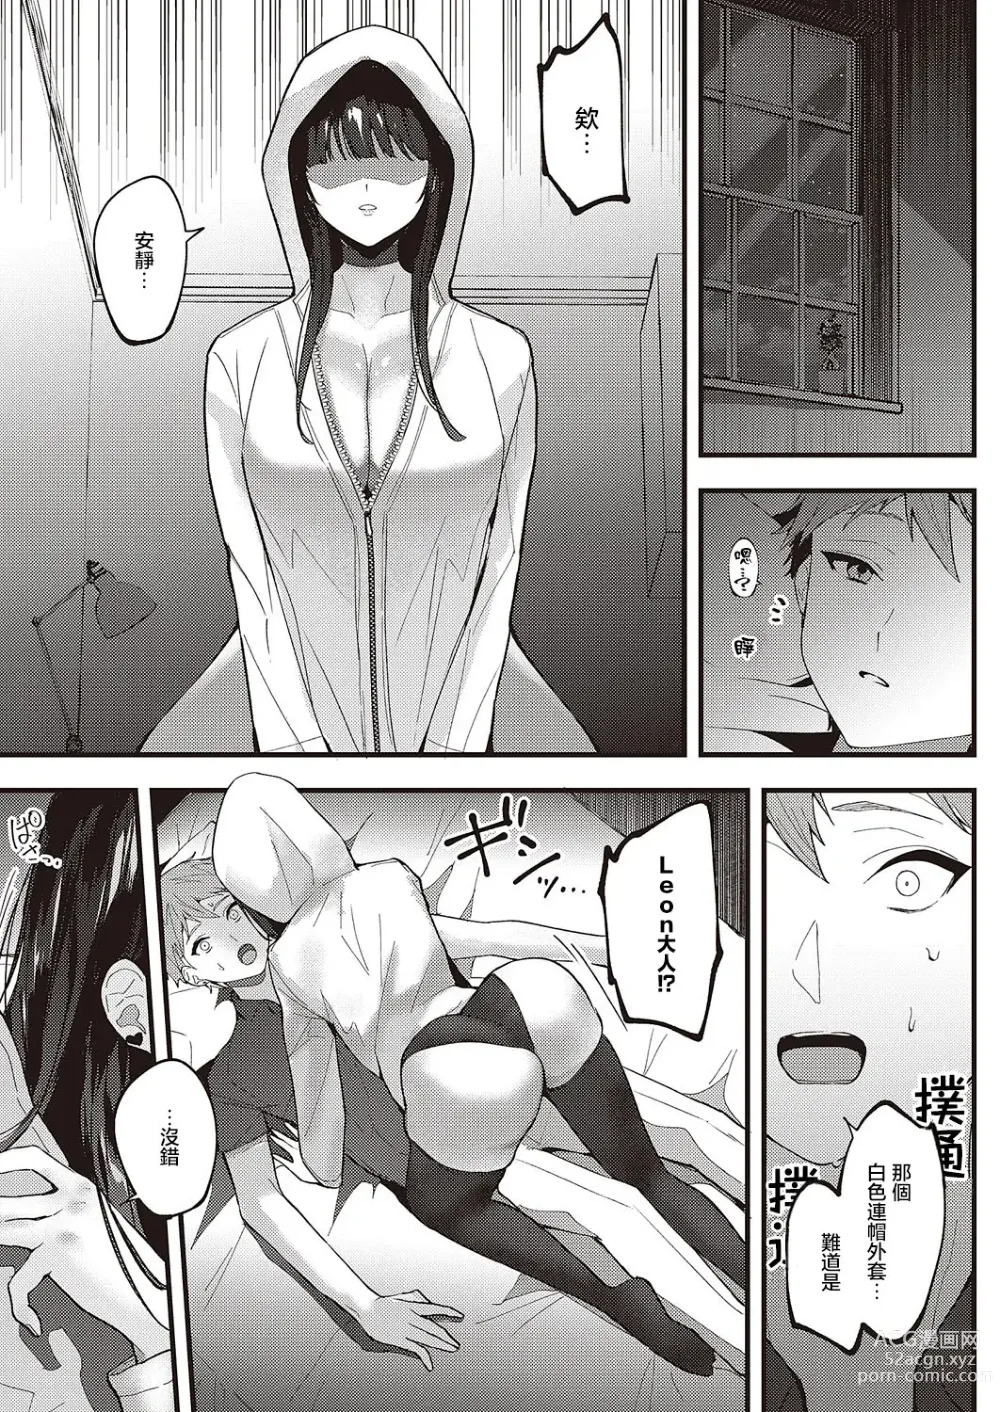 Page 9 of manga Cool Voice wa Kimi no Tame